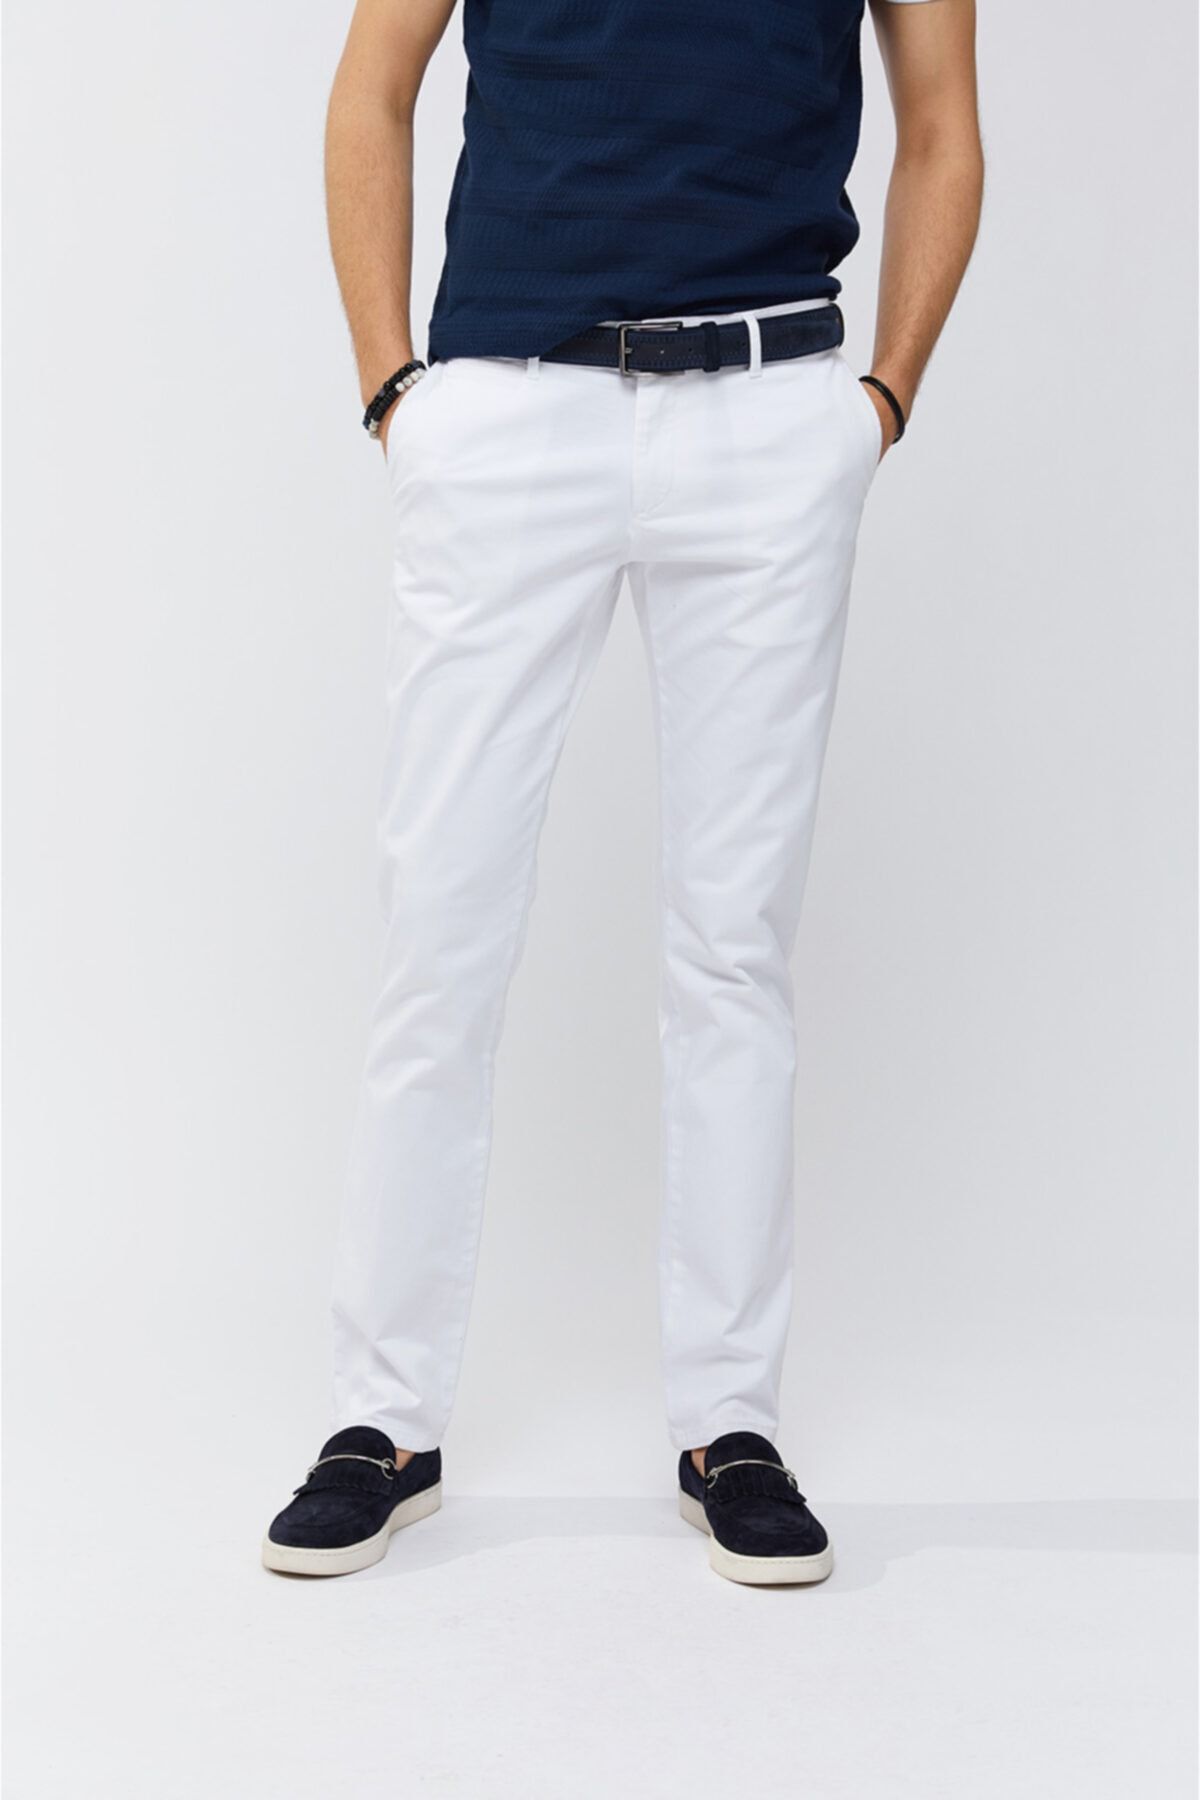 Erkek Beyaz Yandan Cepli Düz Slim Fit Pantolon A91b3556